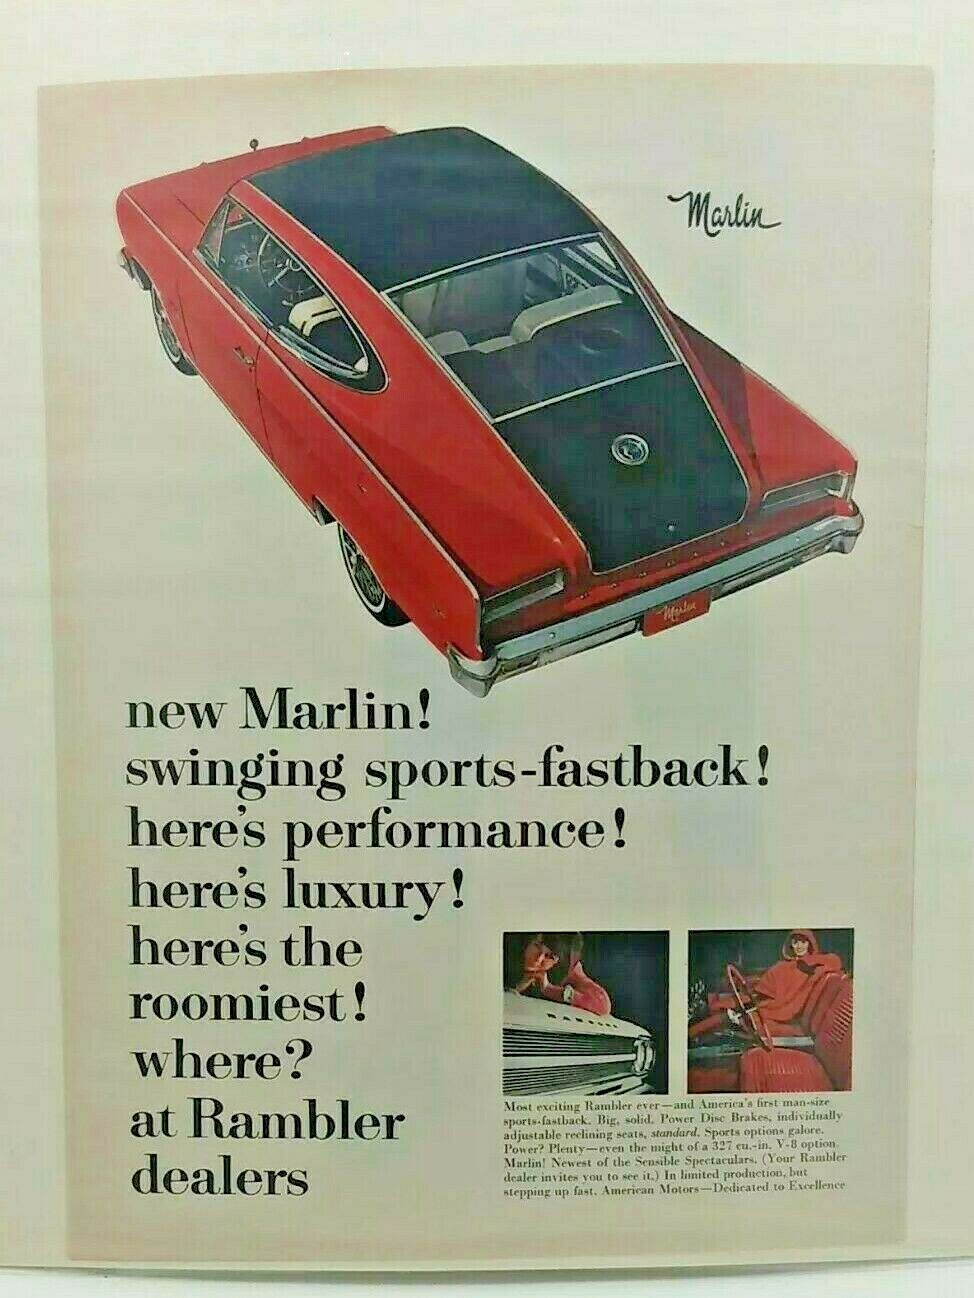 1965 New Marlin Swinging Sports Fastback Rambler - 8.5